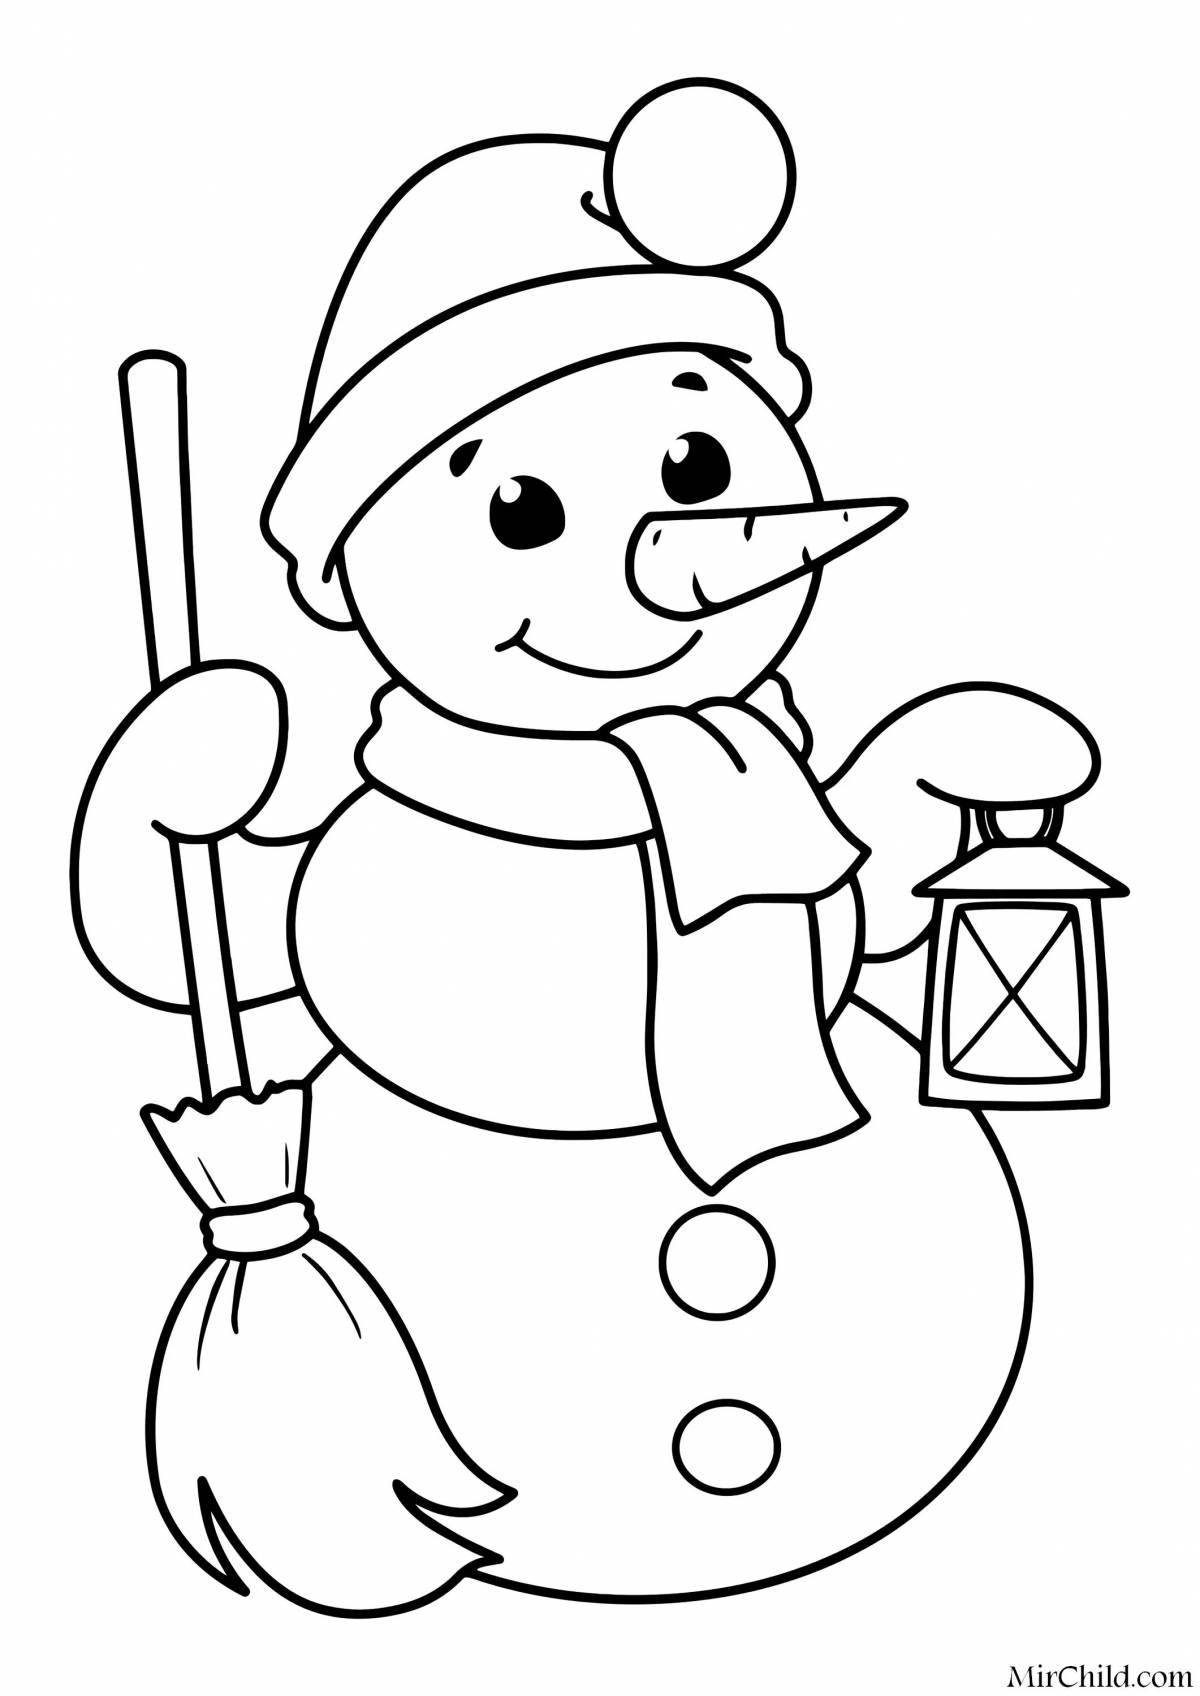 Fancy snowman coloring page